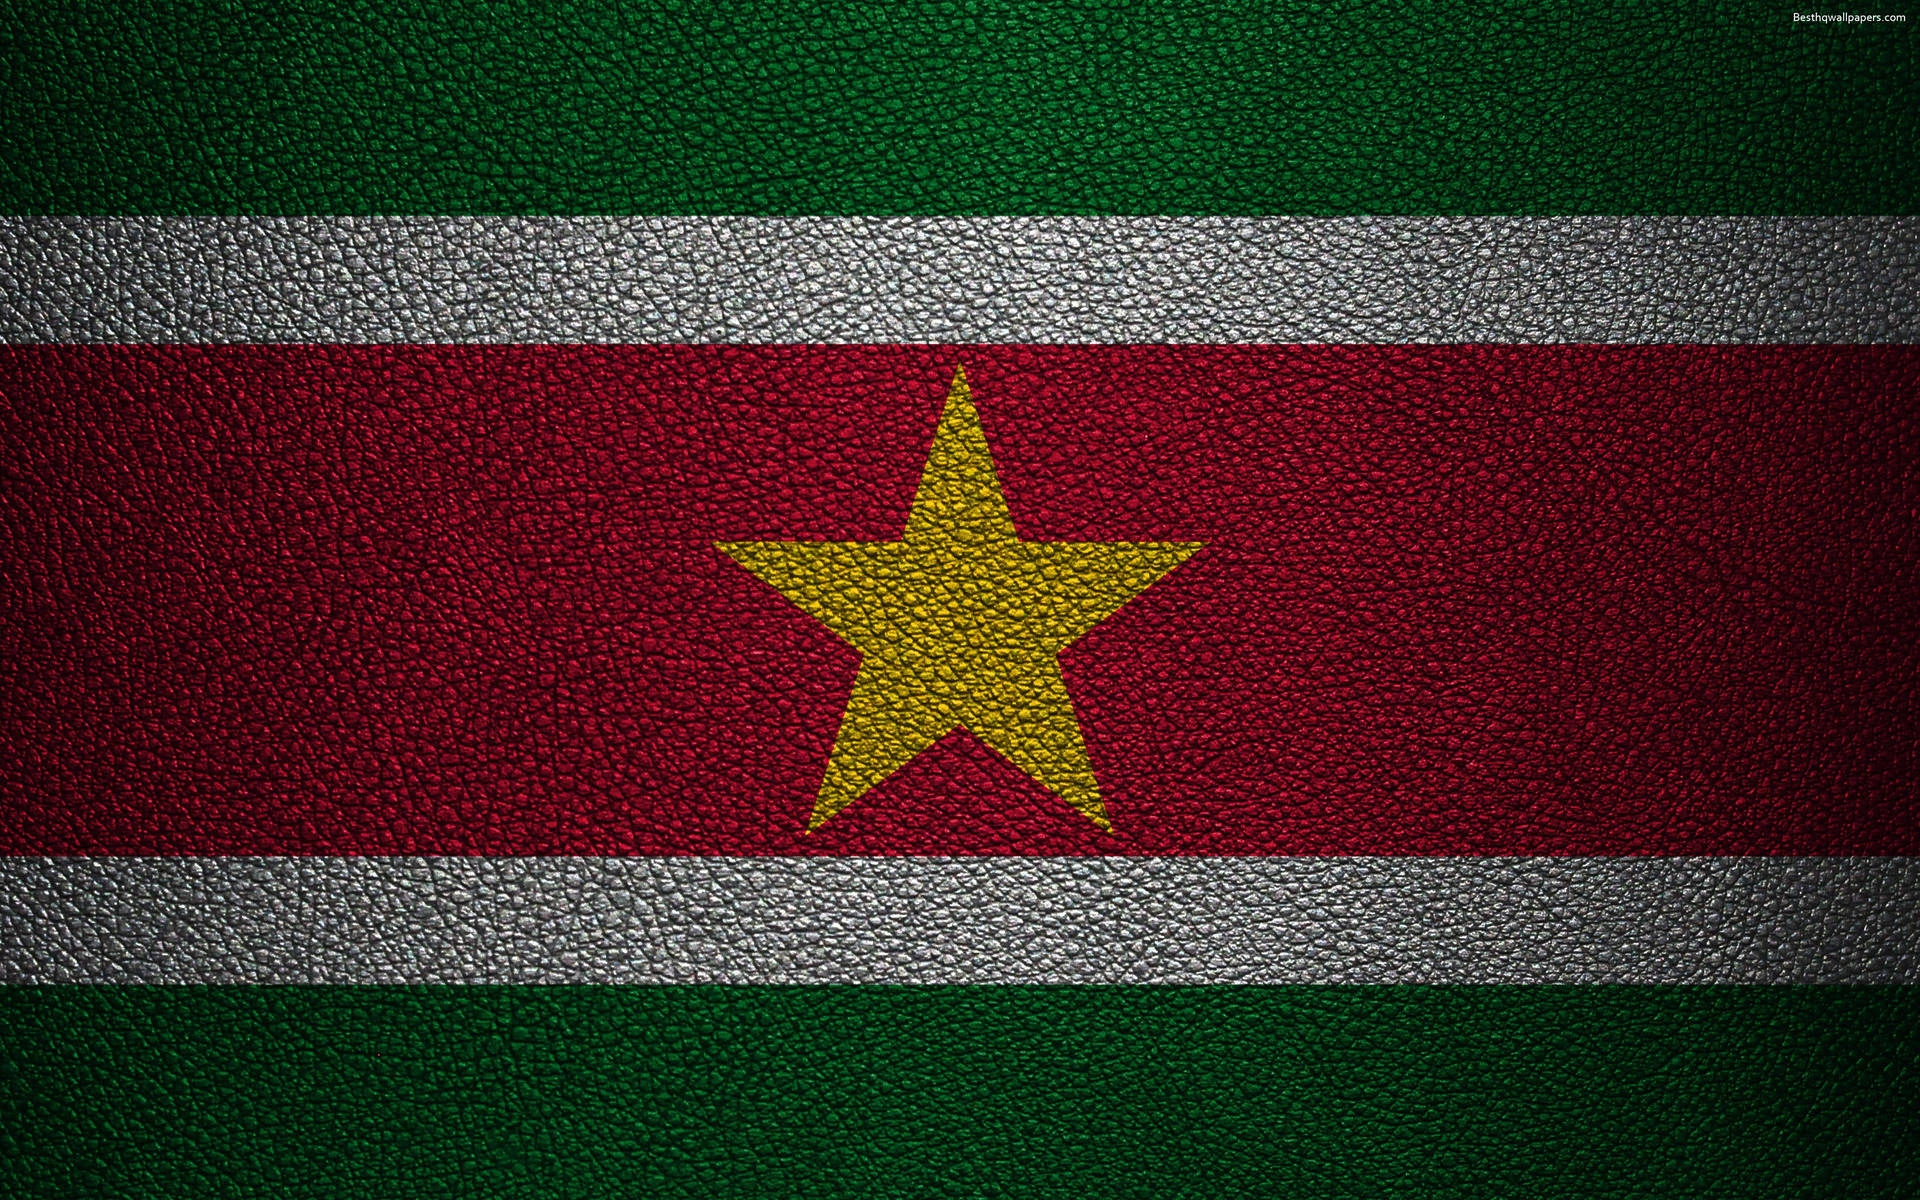 Suriname Official Flag